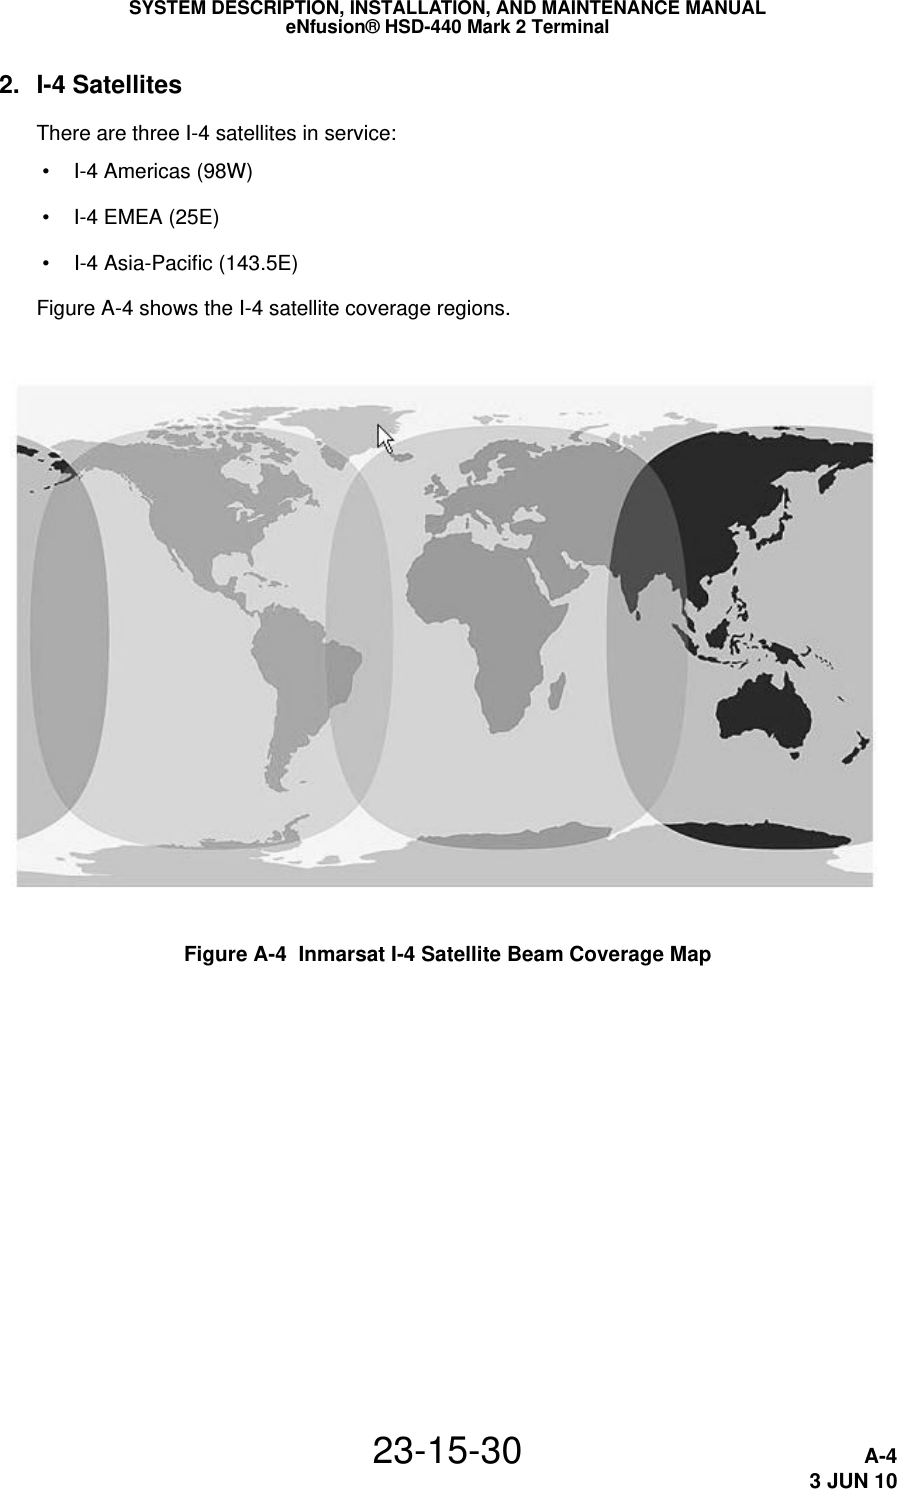 SYSTEM DESCRIPTION, INSTALLATION, AND MAINTENANCE MANUALeNfusion® HSD-440 Mark 2 Terminal23-15-30 A-43 JUN 102. I-4 SatellitesThere are three I-4 satellites in service: • I-4 Americas (98W) • I-4 EMEA (25E) • I-4 Asia-Pacific (143.5E)Figure A-4 shows the I-4 satellite coverage regions.Figure A-4  Inmarsat I-4 Satellite Beam Coverage Map